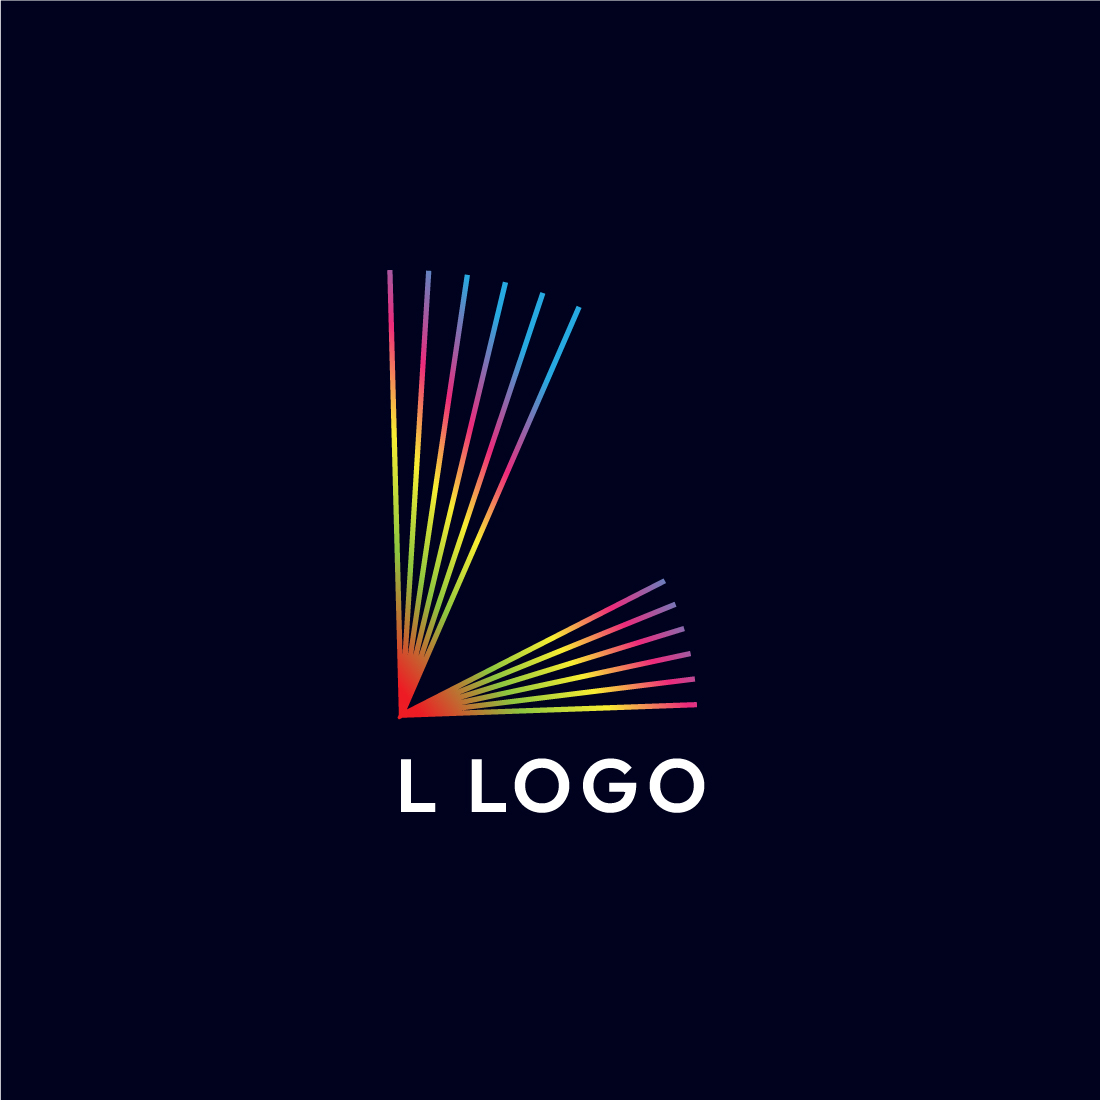 Sleek Line Art Letter L Logo Design - Professional Branding Solution preview image.